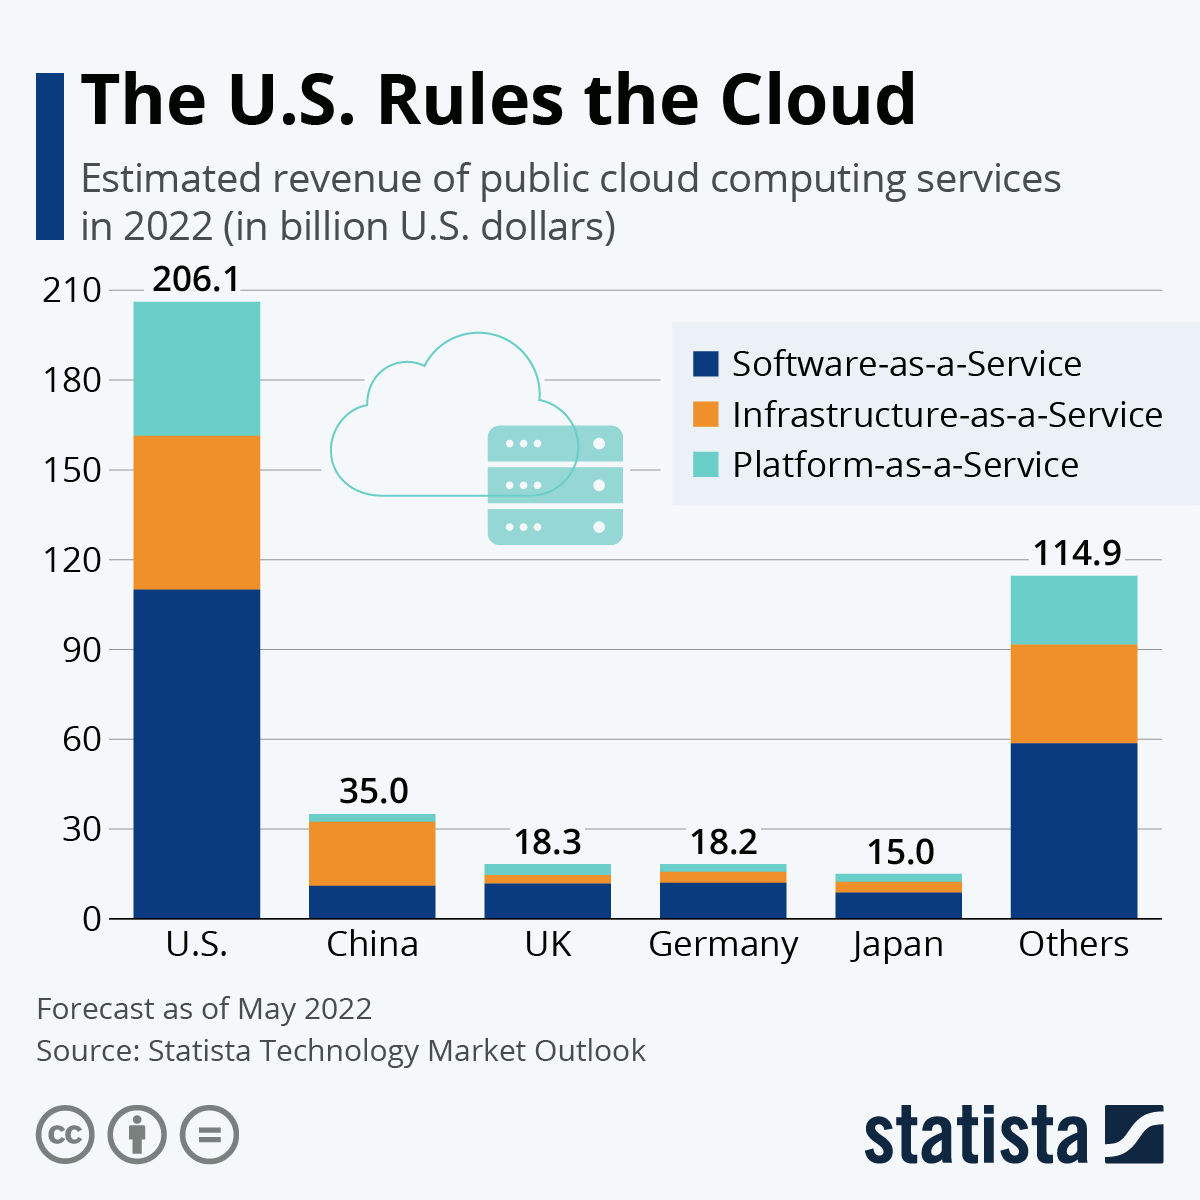 The U.S. Rules the Cloud
